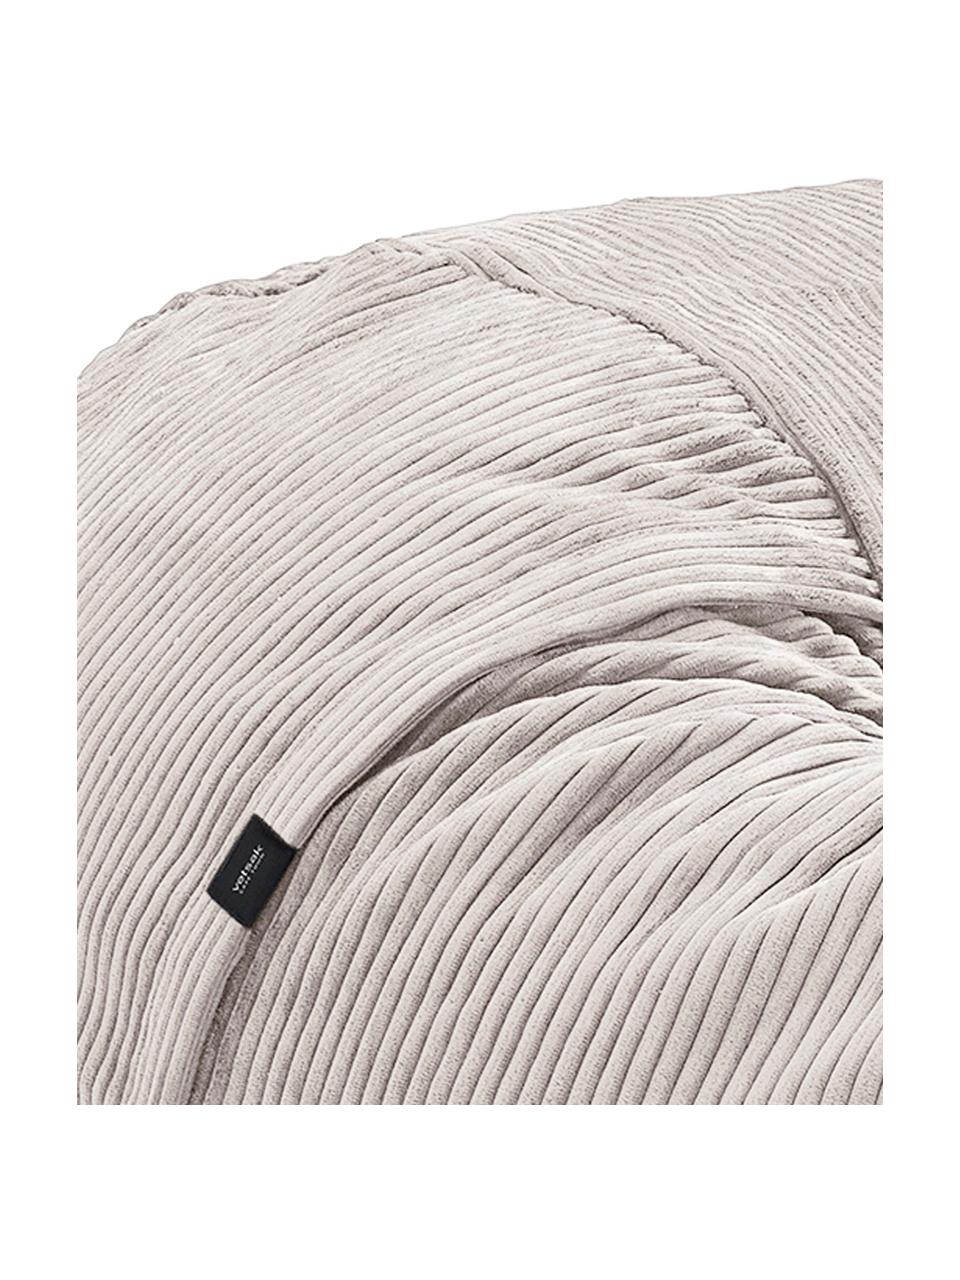 Pouf sacco XL in velluto a coste Velours, Rivestimento: 88% nylon, 12% poliestere, Tessuto grigio, Ø 140 x Alt. 90 cm